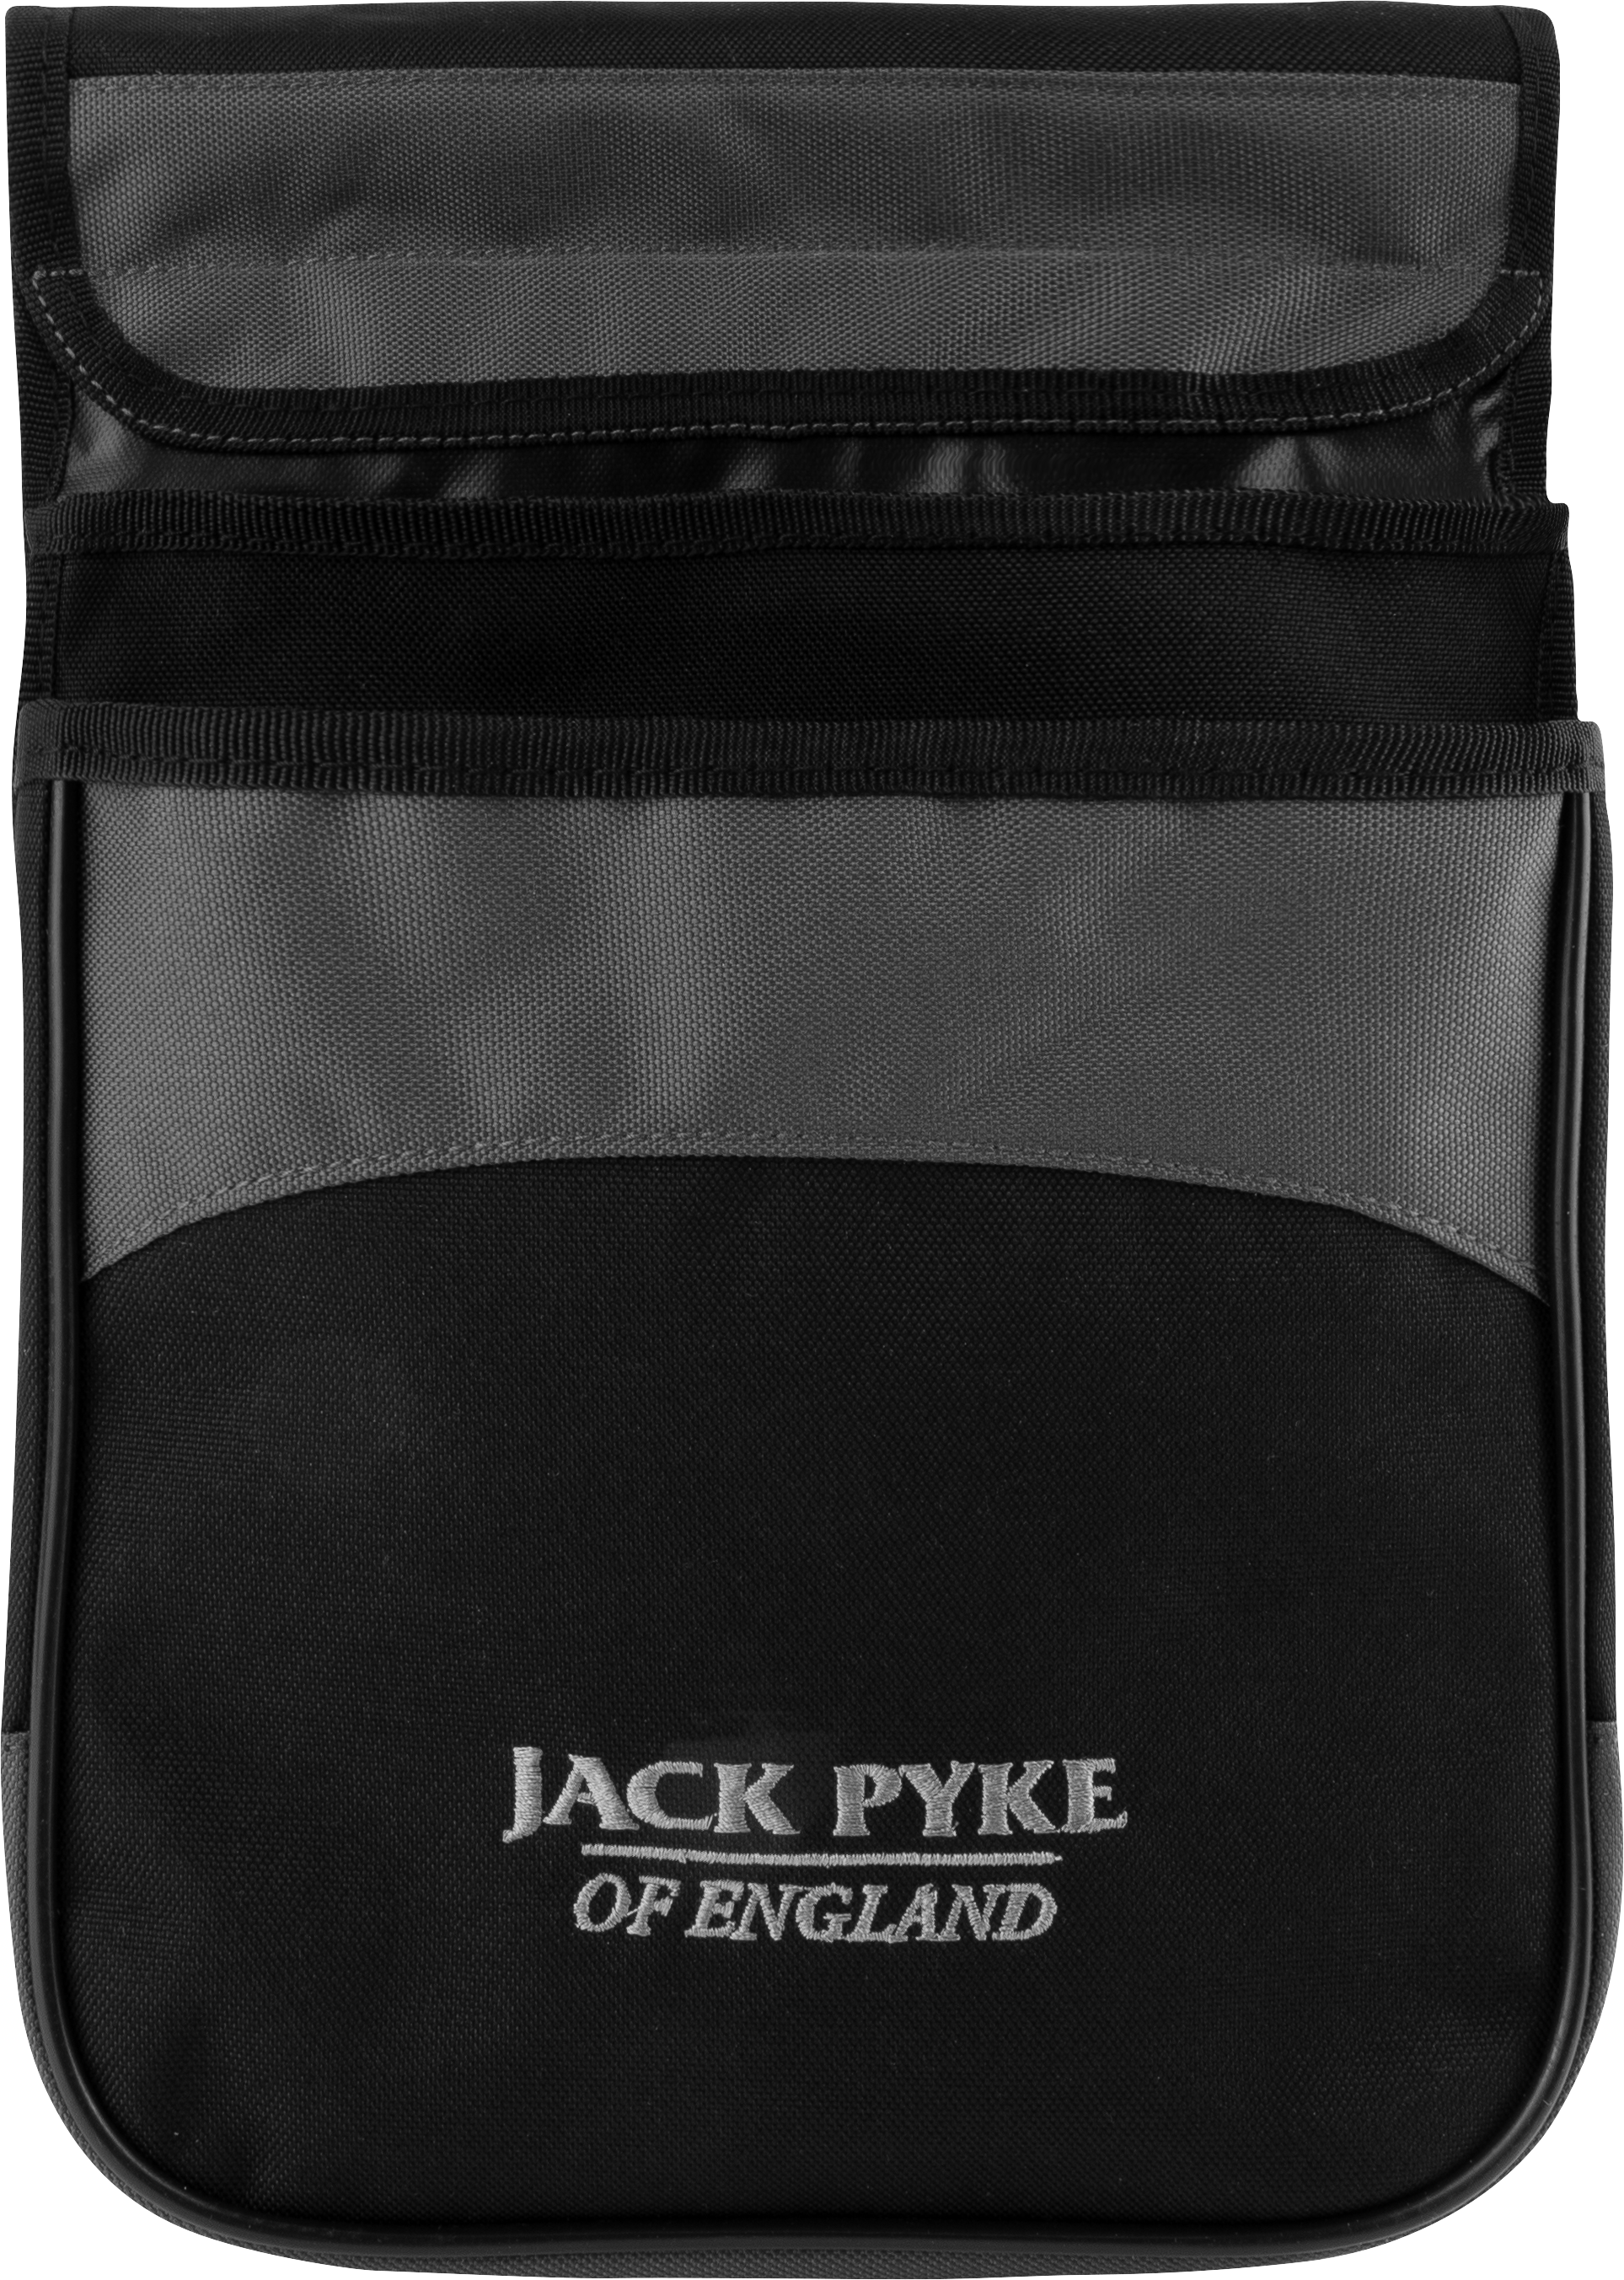 Jack Pyke Sporting Cartridge Pouch in Black 